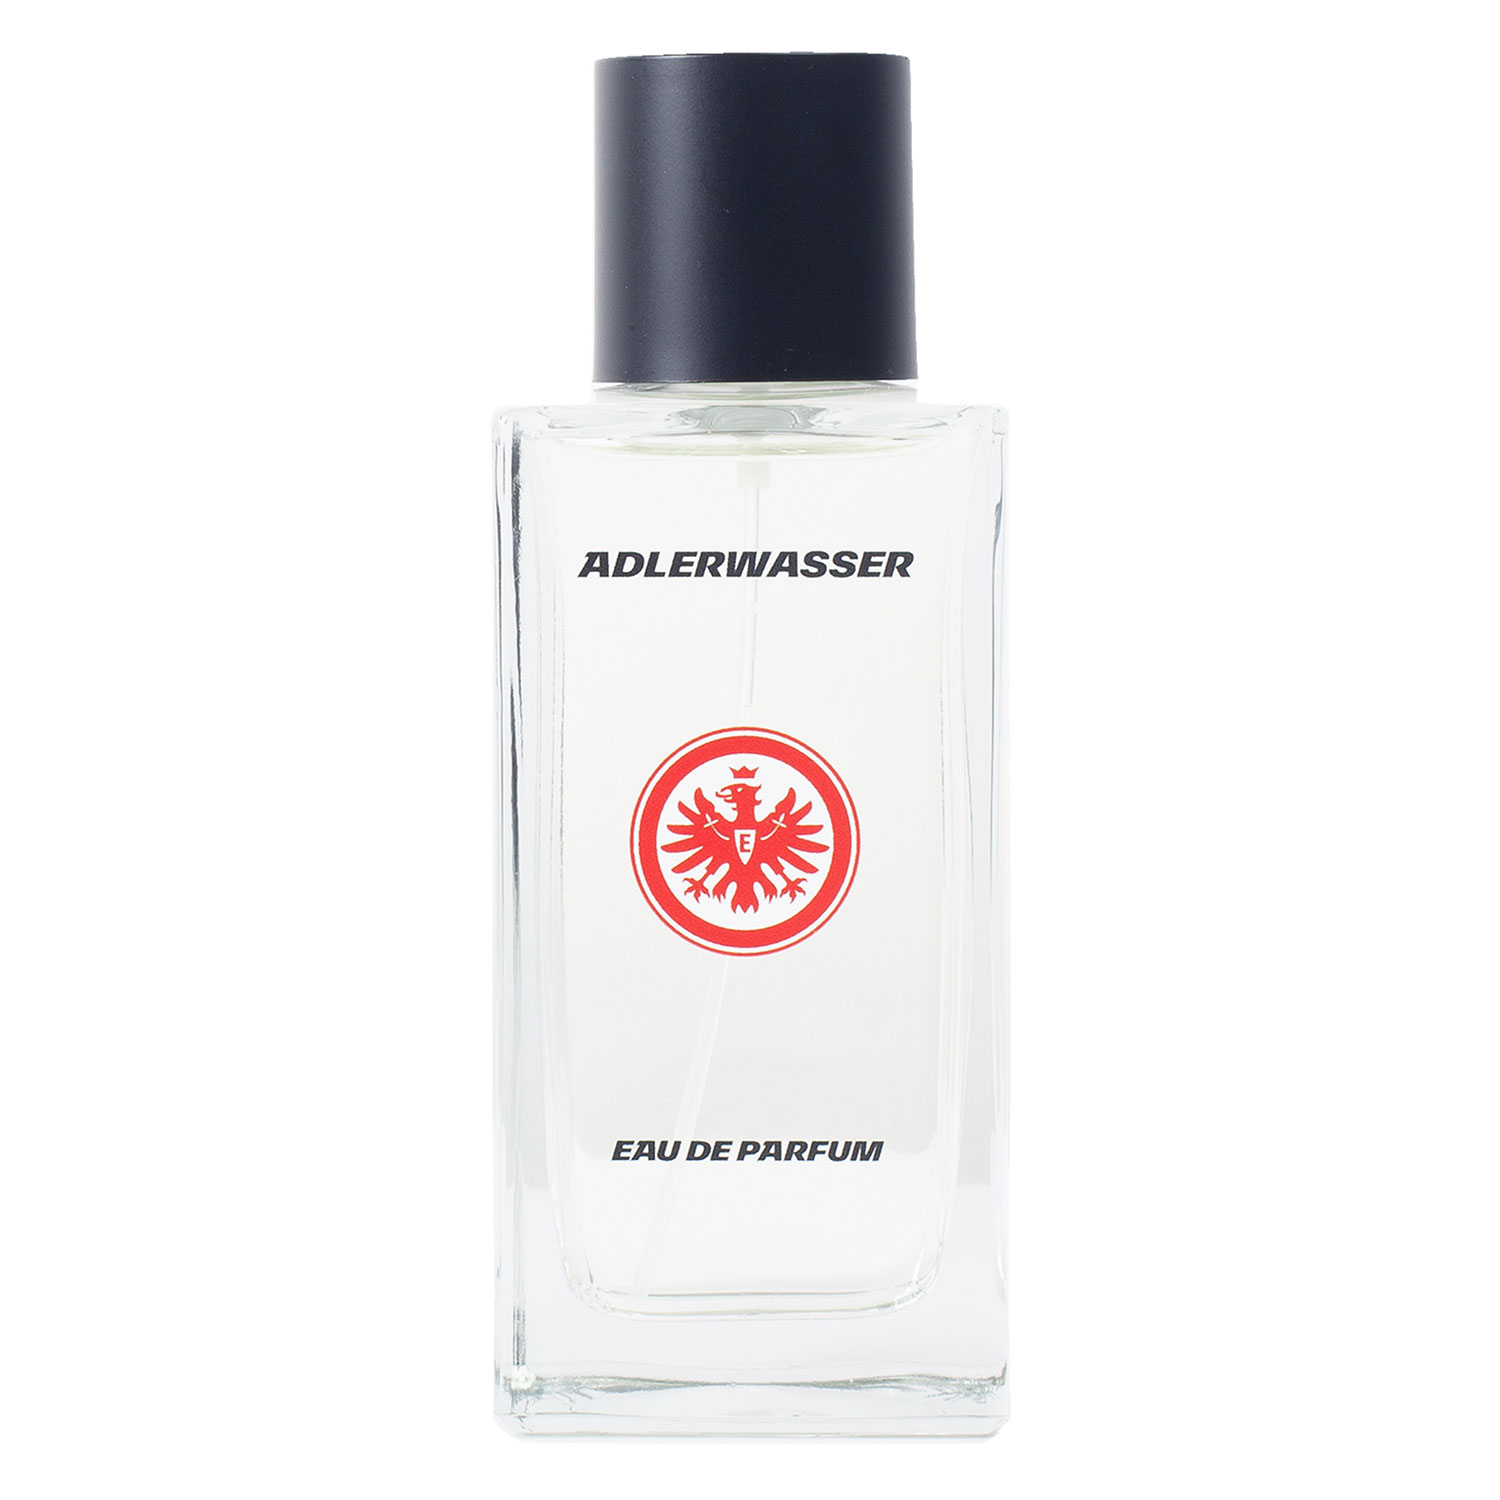 Bild 1: Adlerwasser, Eau de Parfum (400 € /1 L)